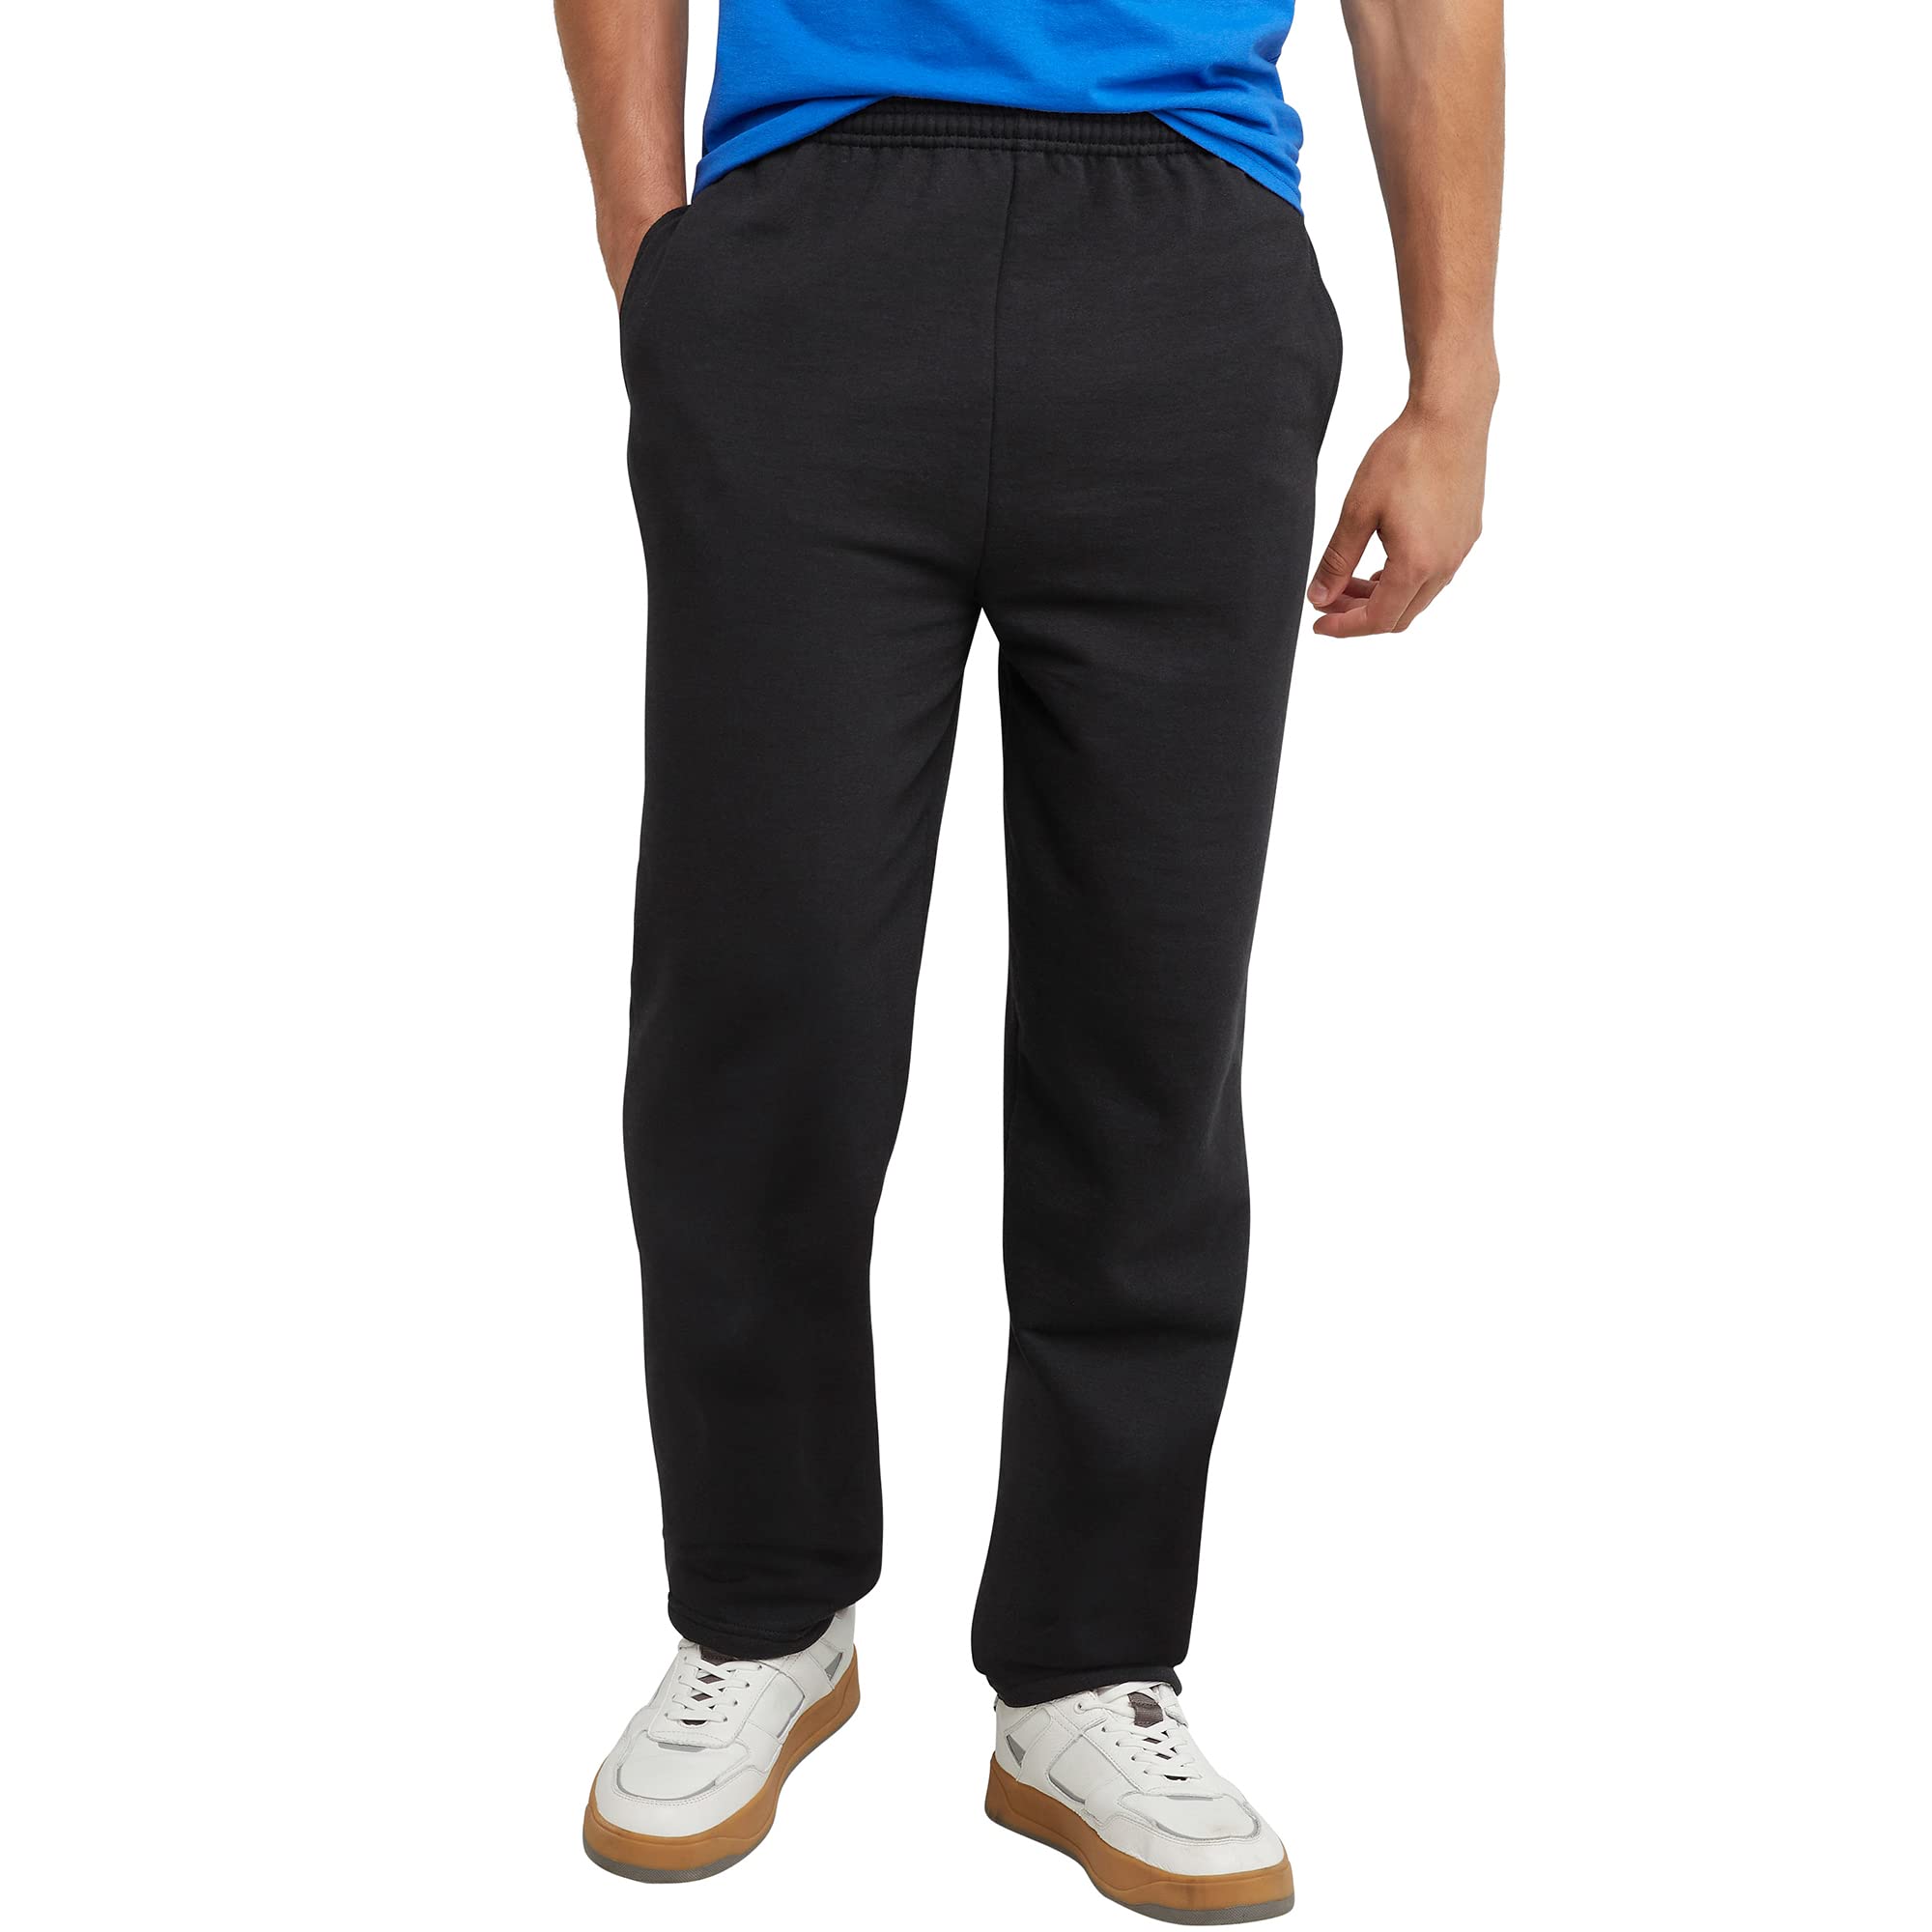 Hanes Men's ComfortSoft EcoSmart Fleece Sweatpants (Black or Charcoal ...